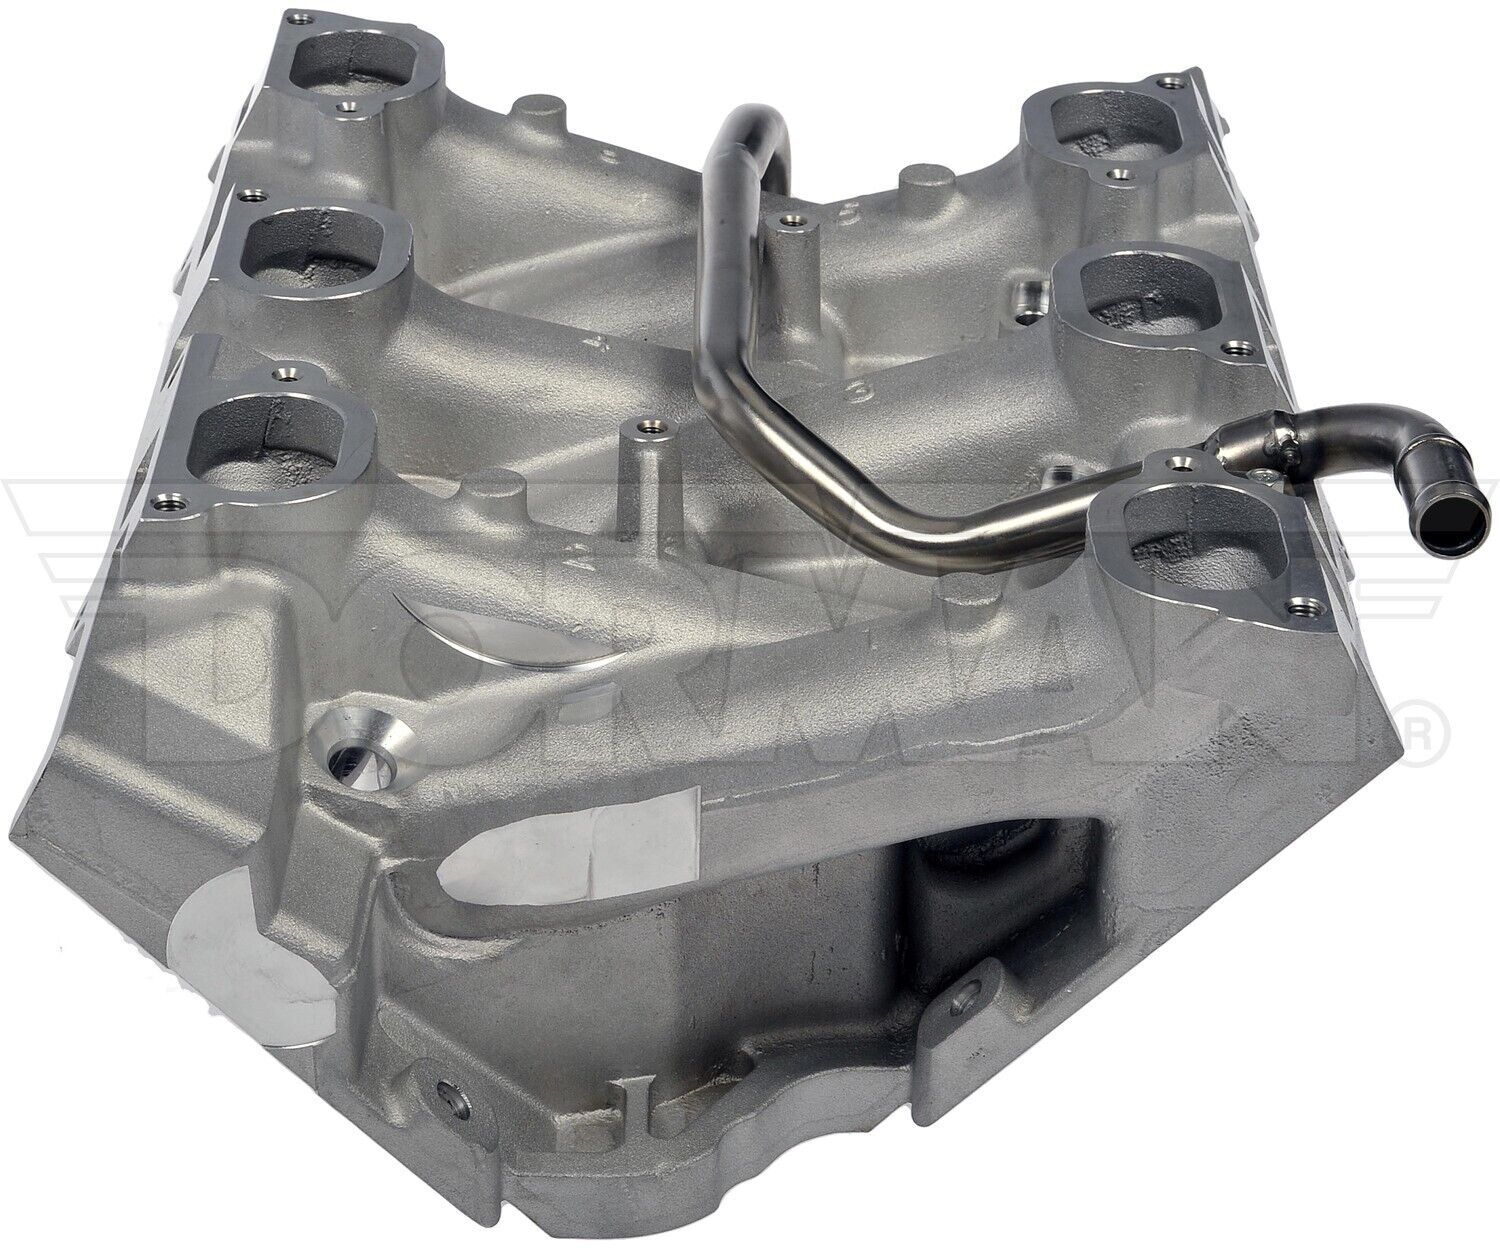 Dorman Engine Intake Manifold Lower Fits 2001-2005 Pontiac Aztek 3.4L V6 2002